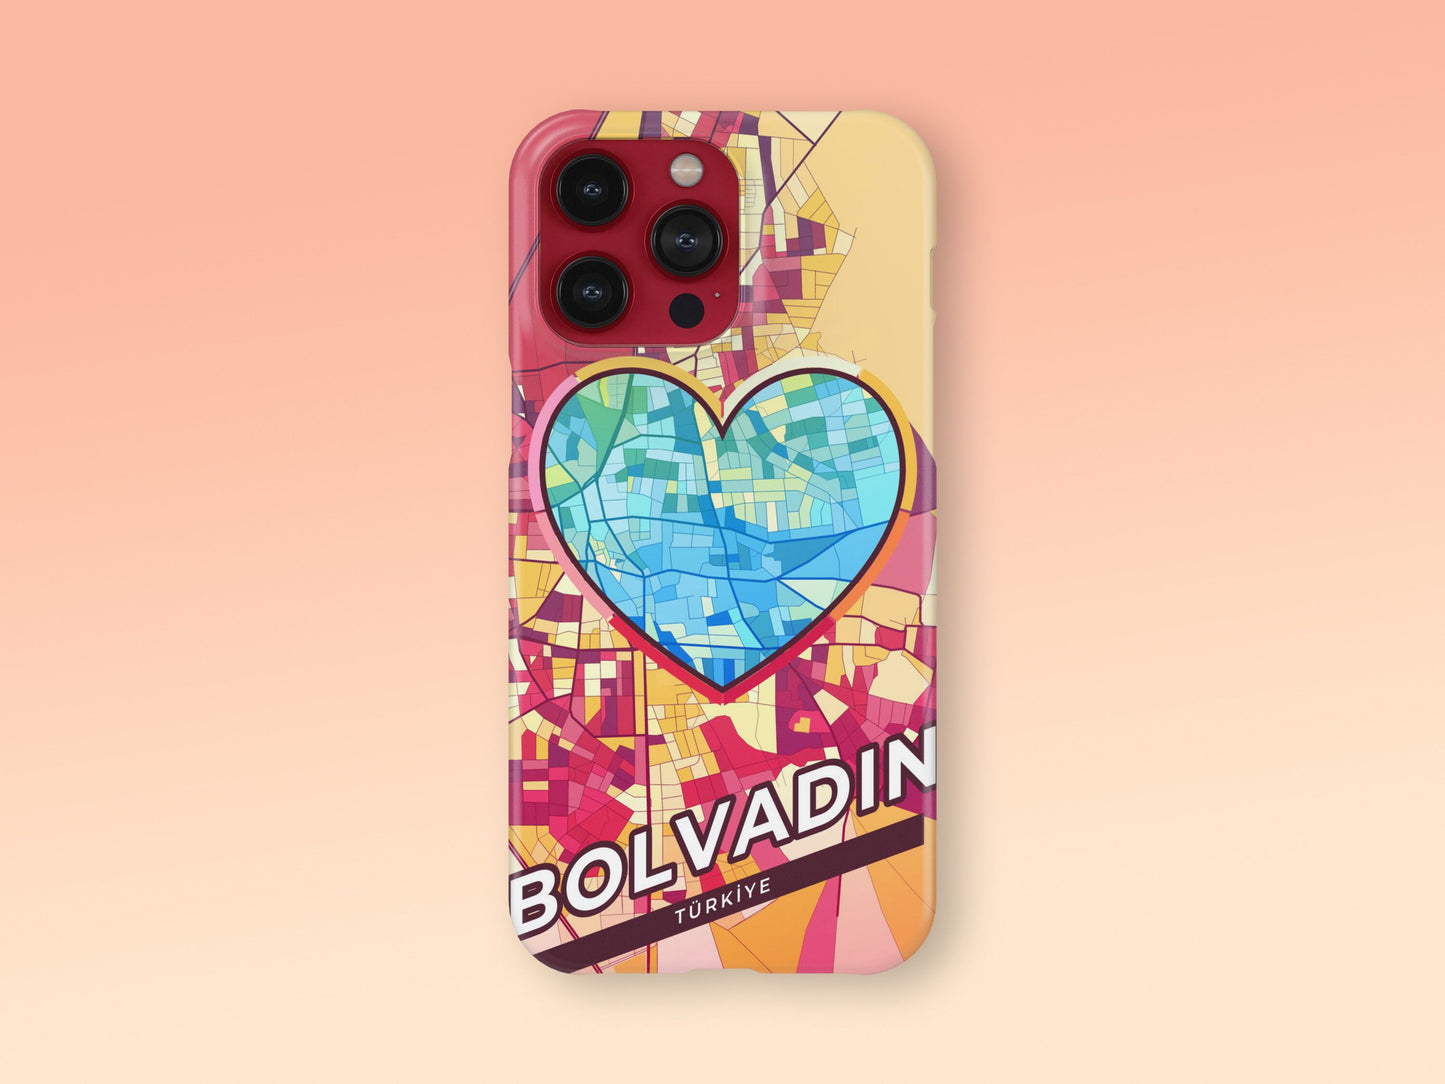 Bolvadin Turkey slim phone case with colorful icon. Birthday, wedding or housewarming gift. Couple match cases. 2